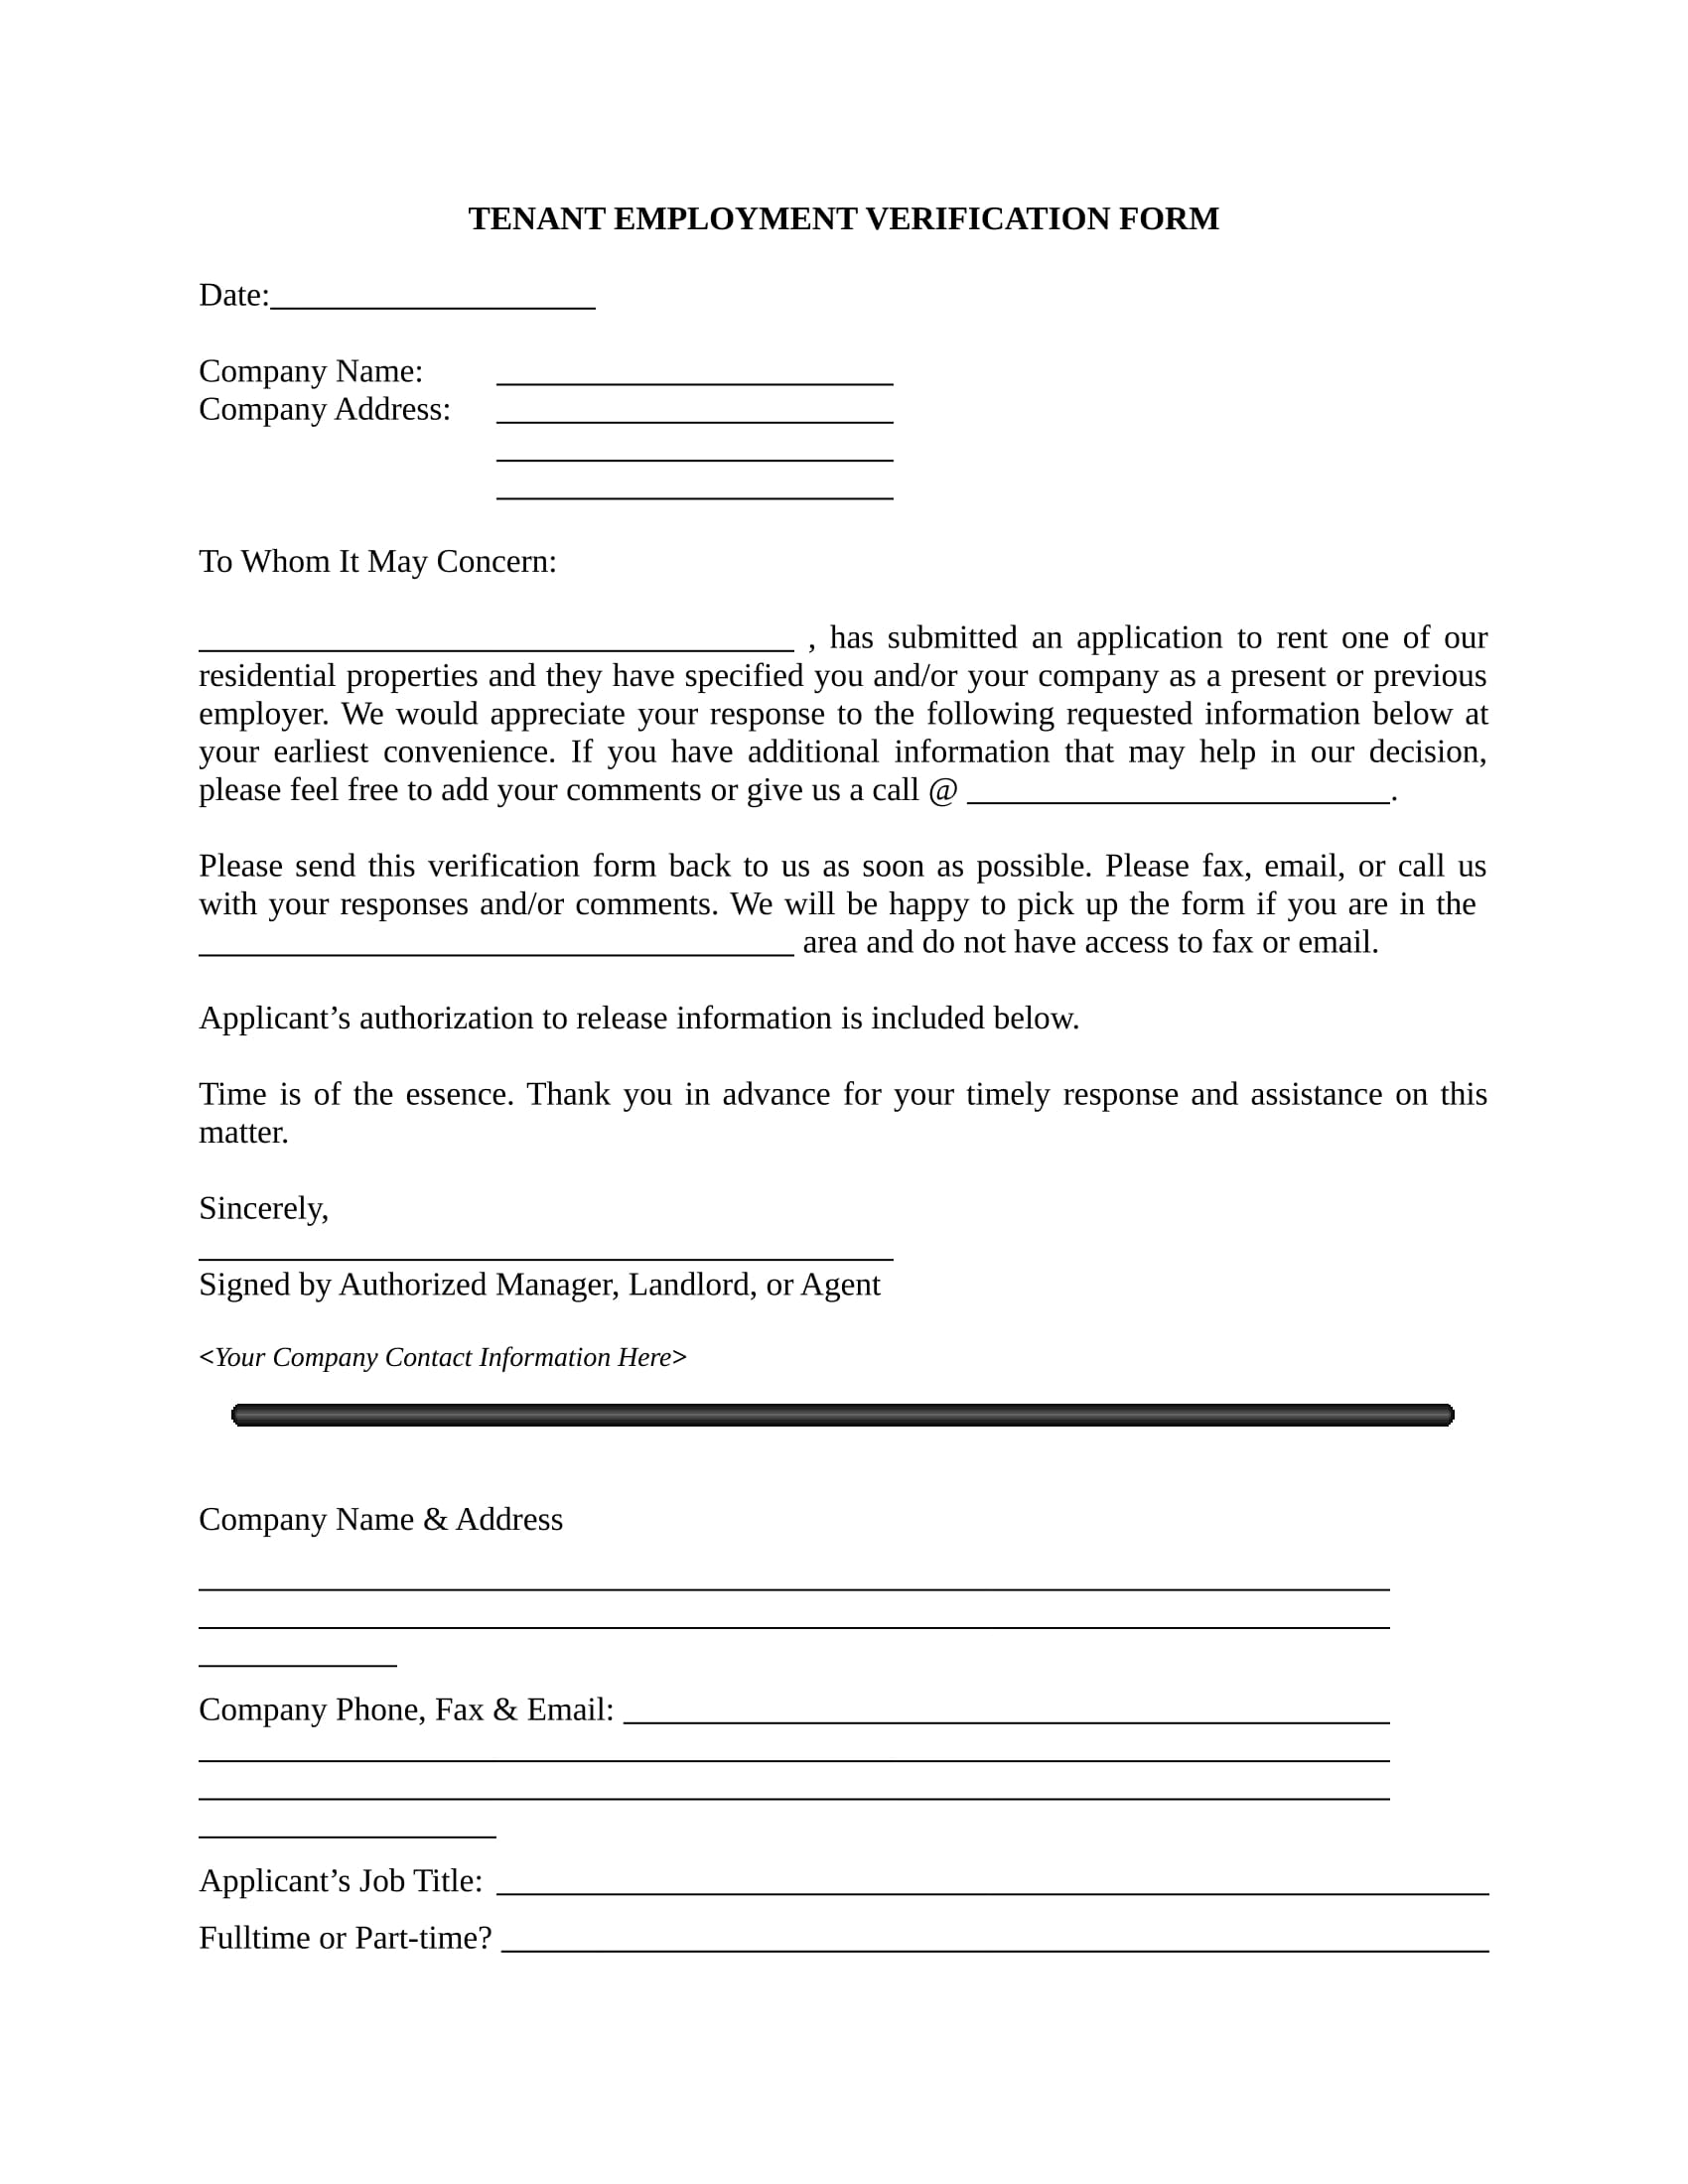 tenant employment verification form 1